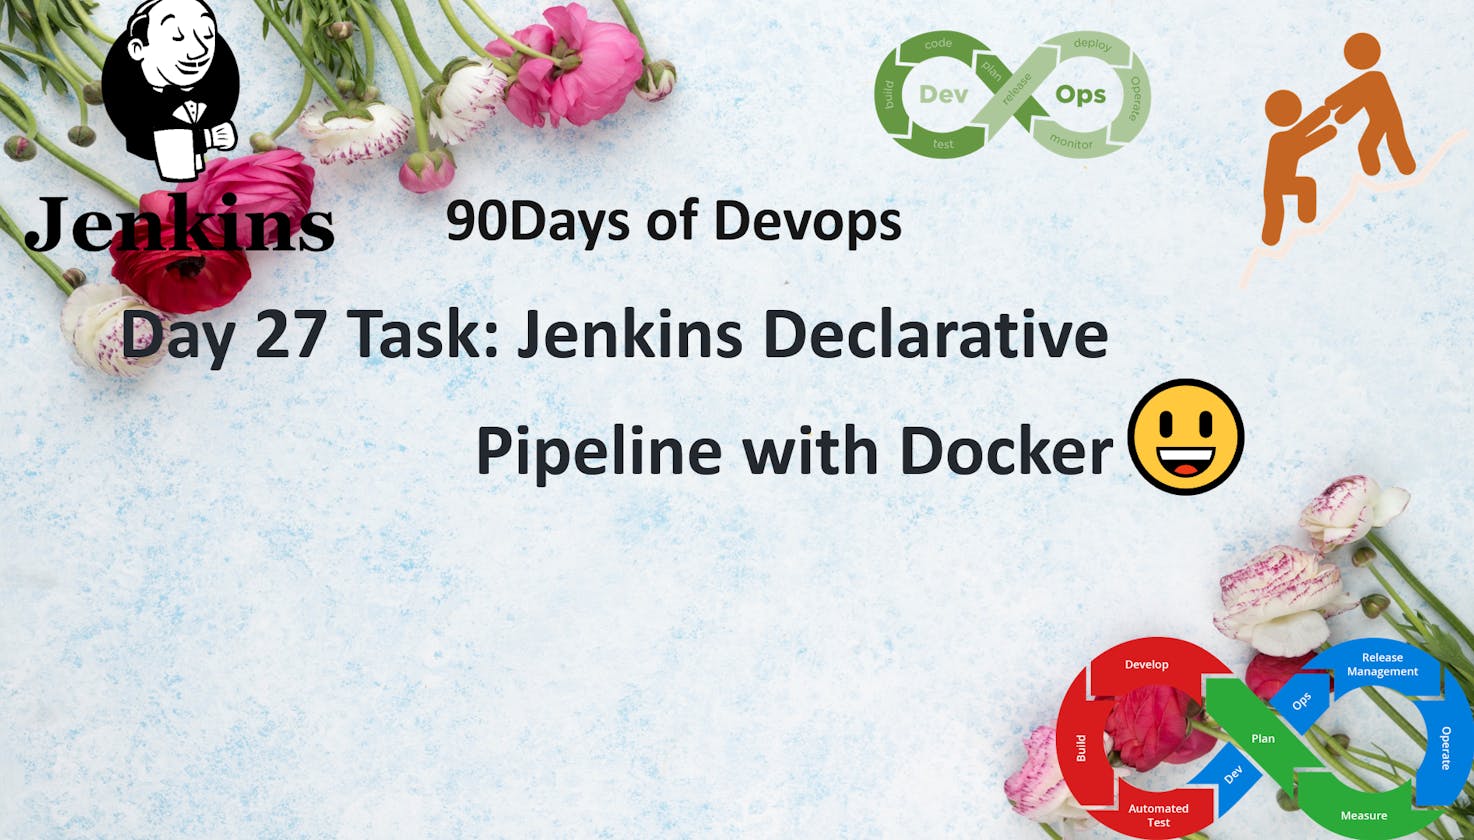 Day 27 Task: Jenkins Declarative Pipeline with Docker